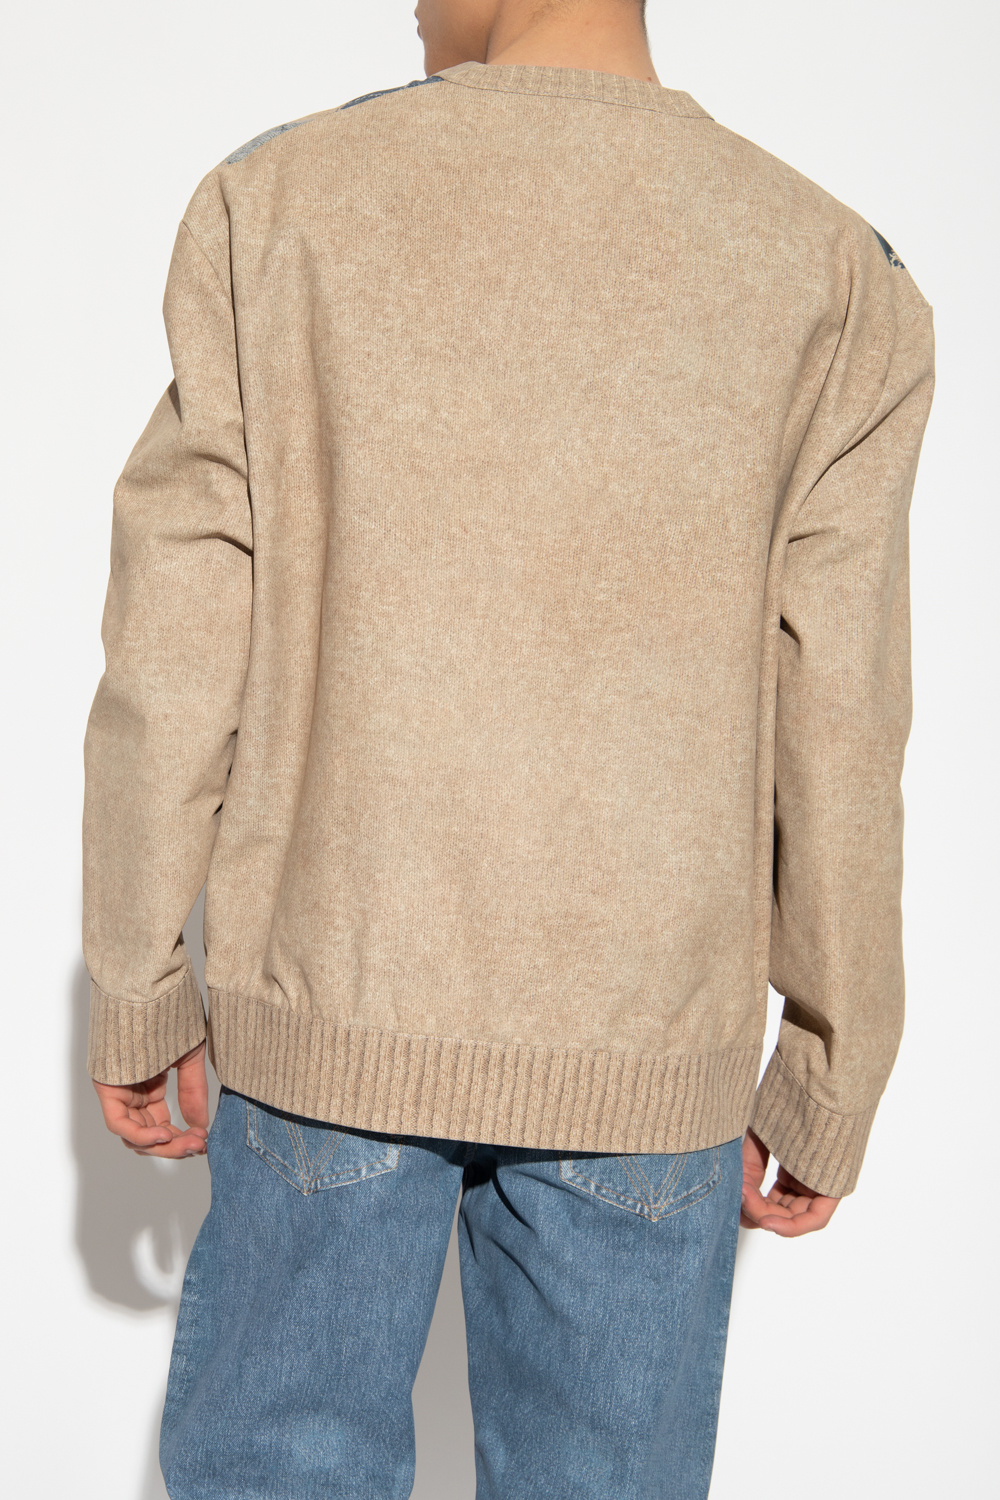 Bottega Veneta Leather sweater